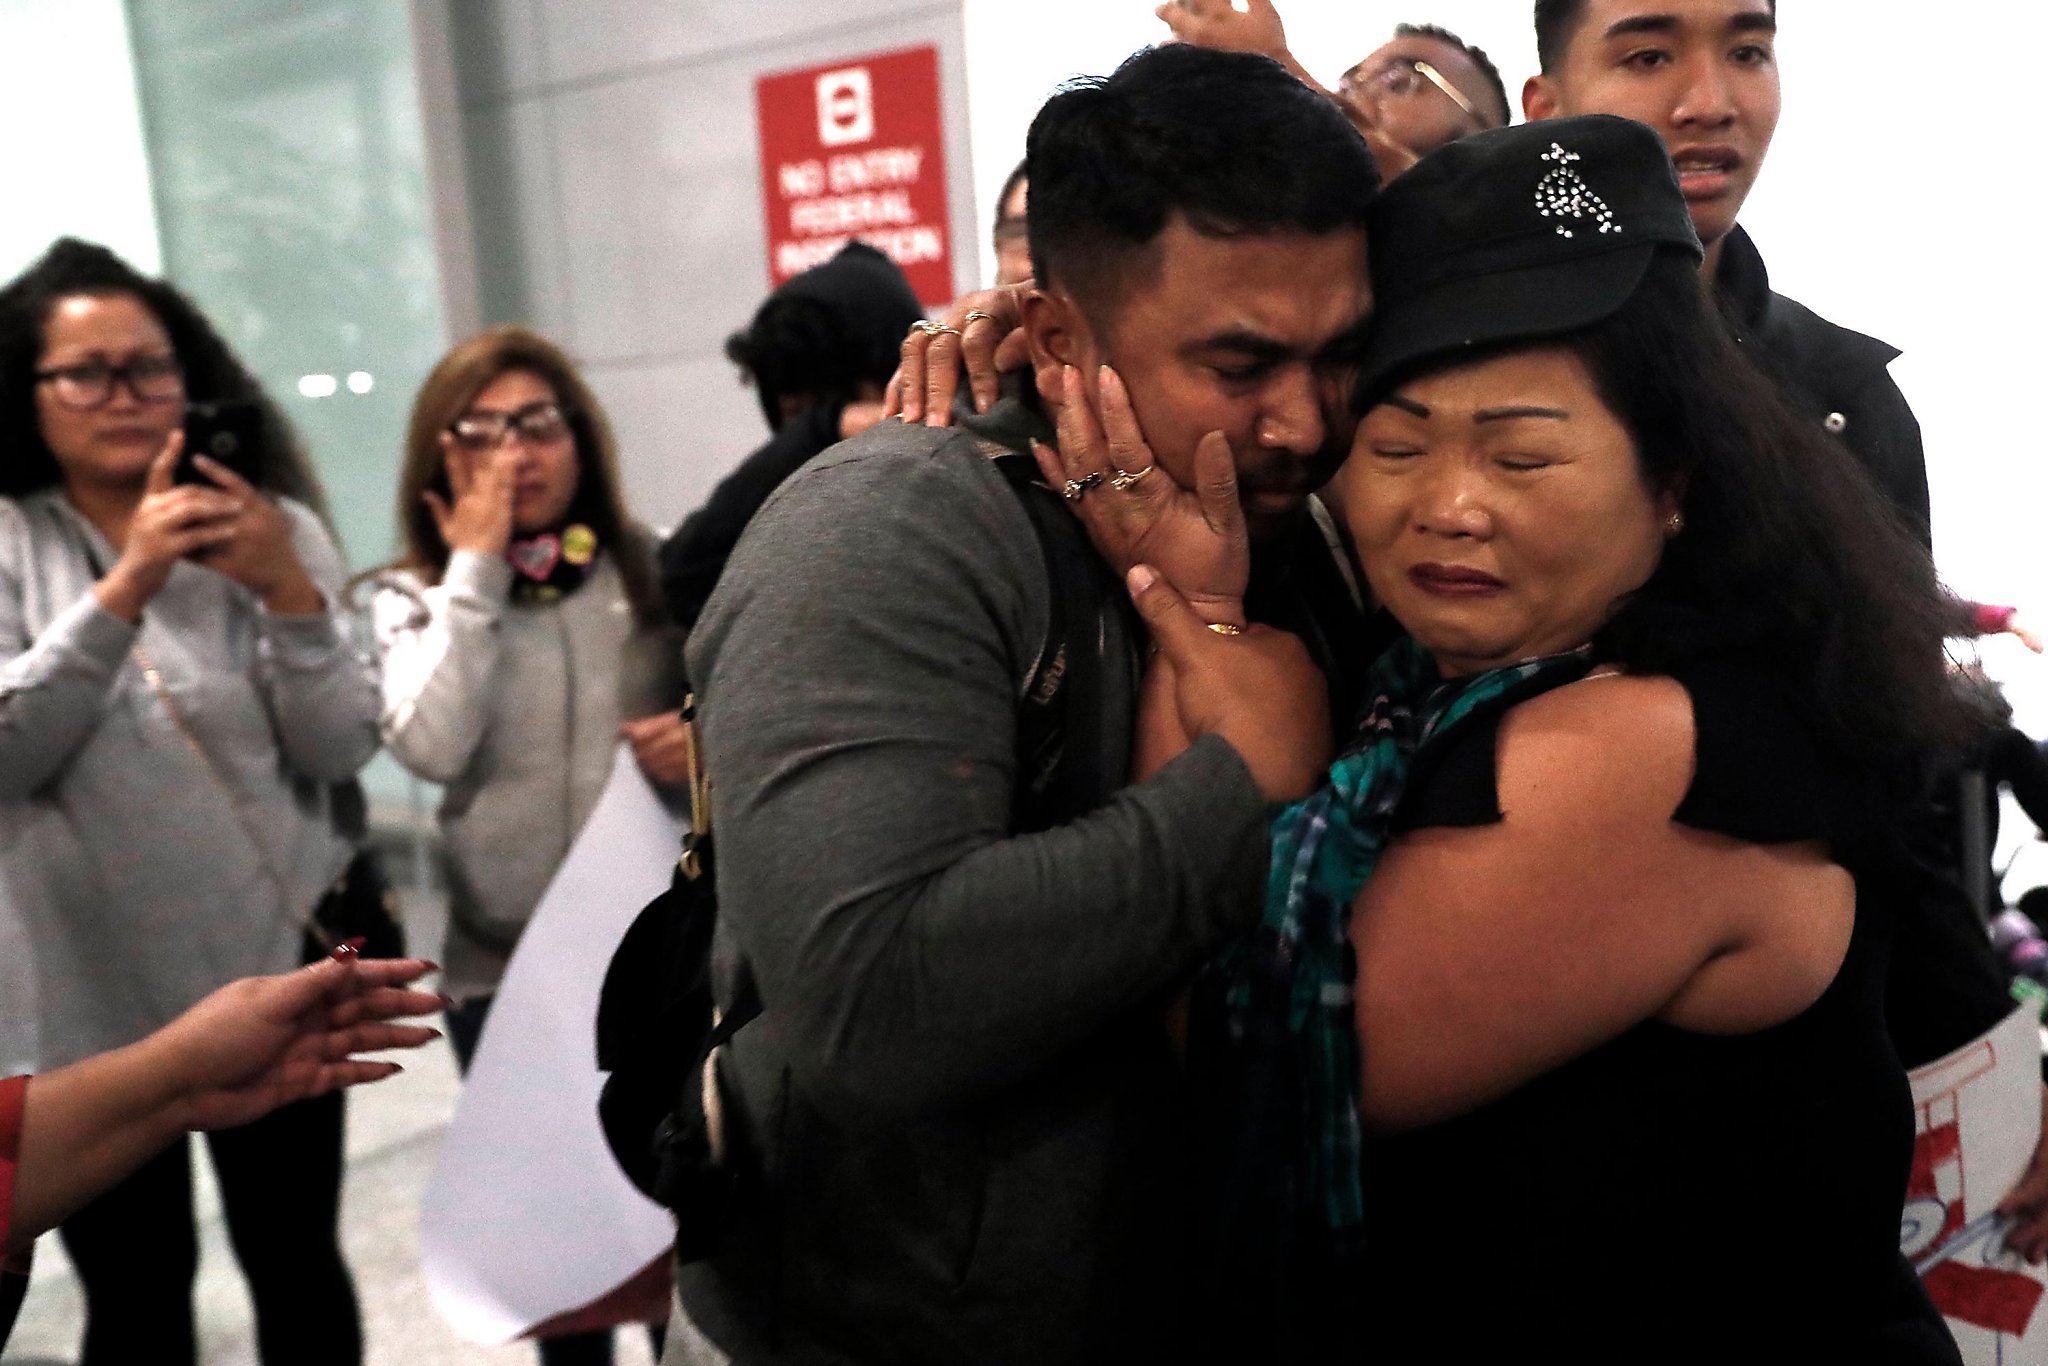 . citizen mistakenly targeted for deportation returns home